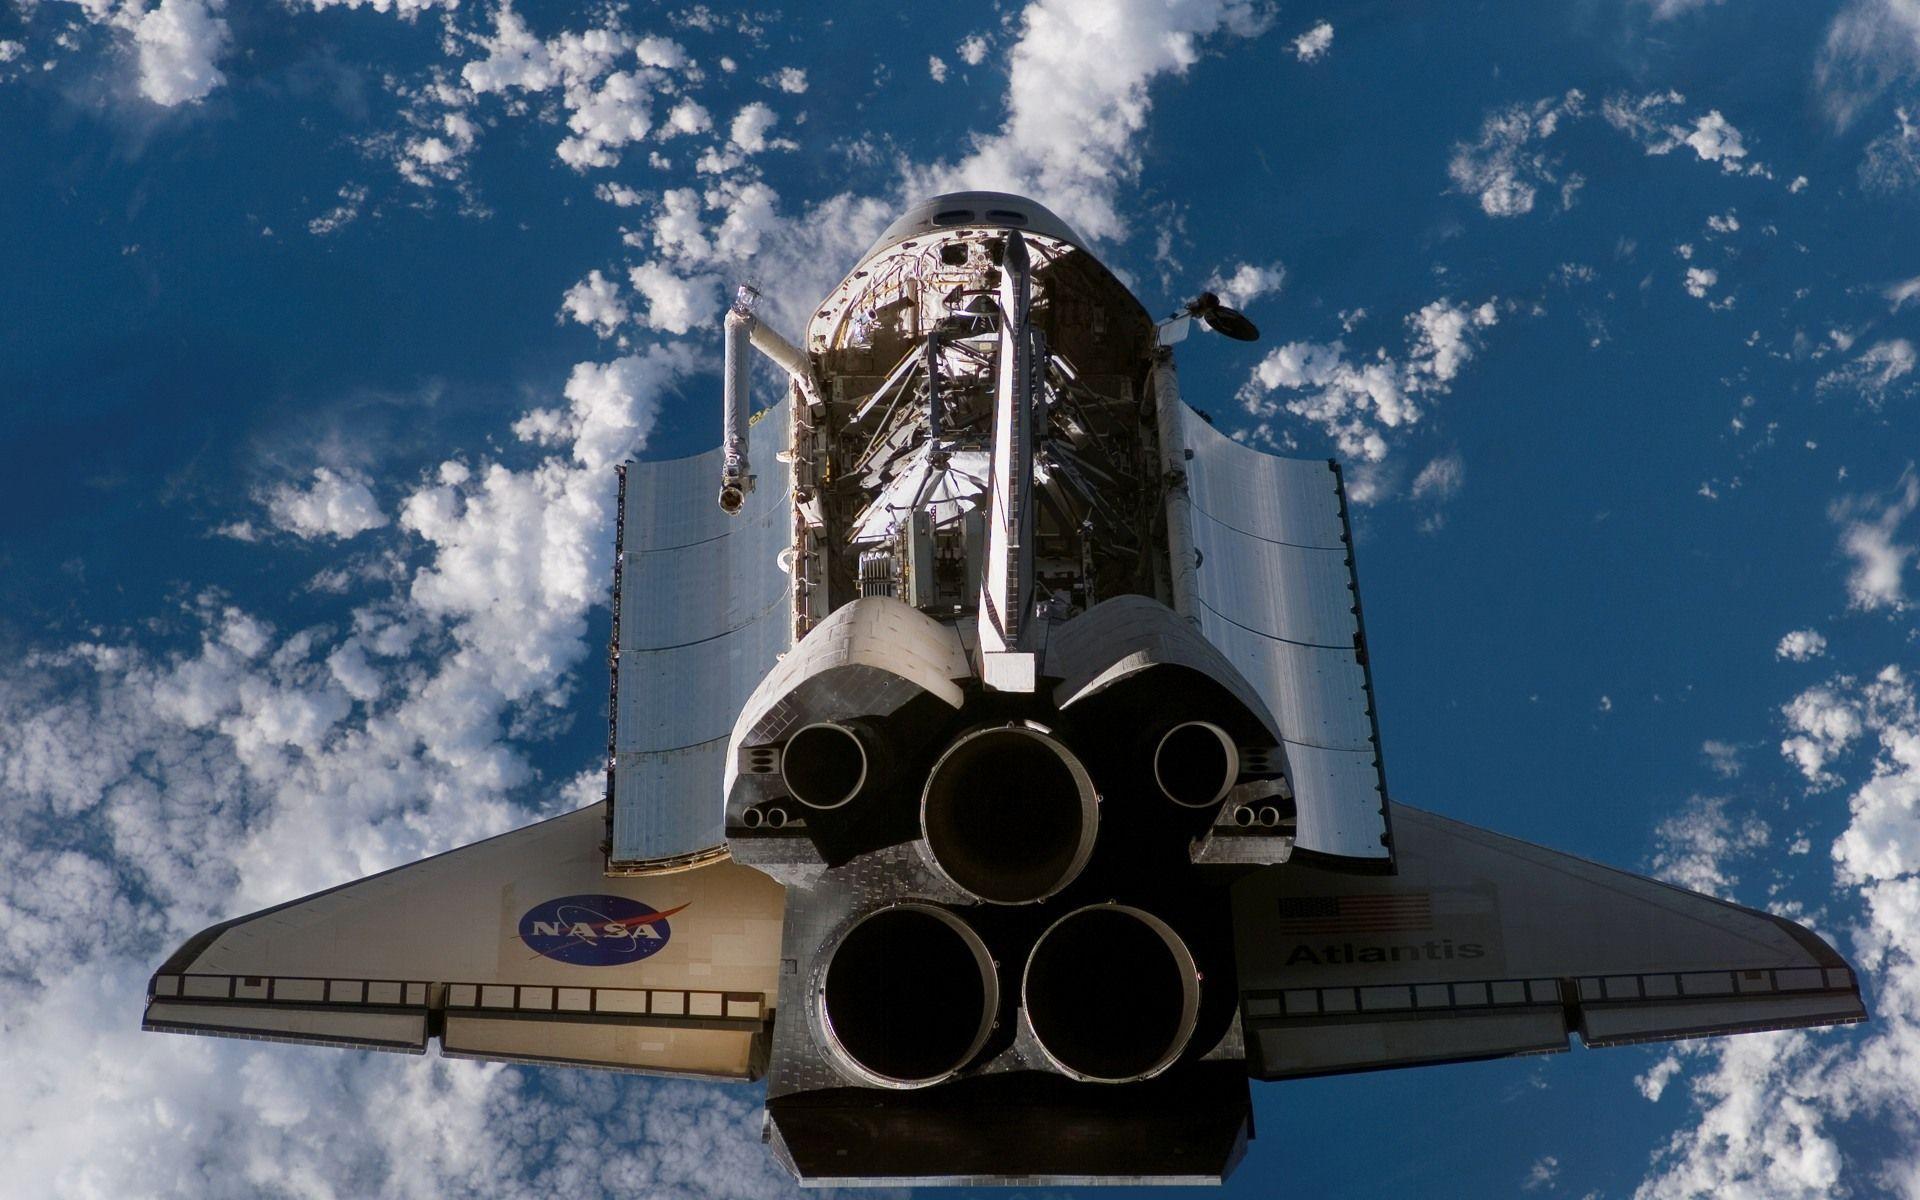 NASA Space Shuttle Atlantis desktop wallpaper